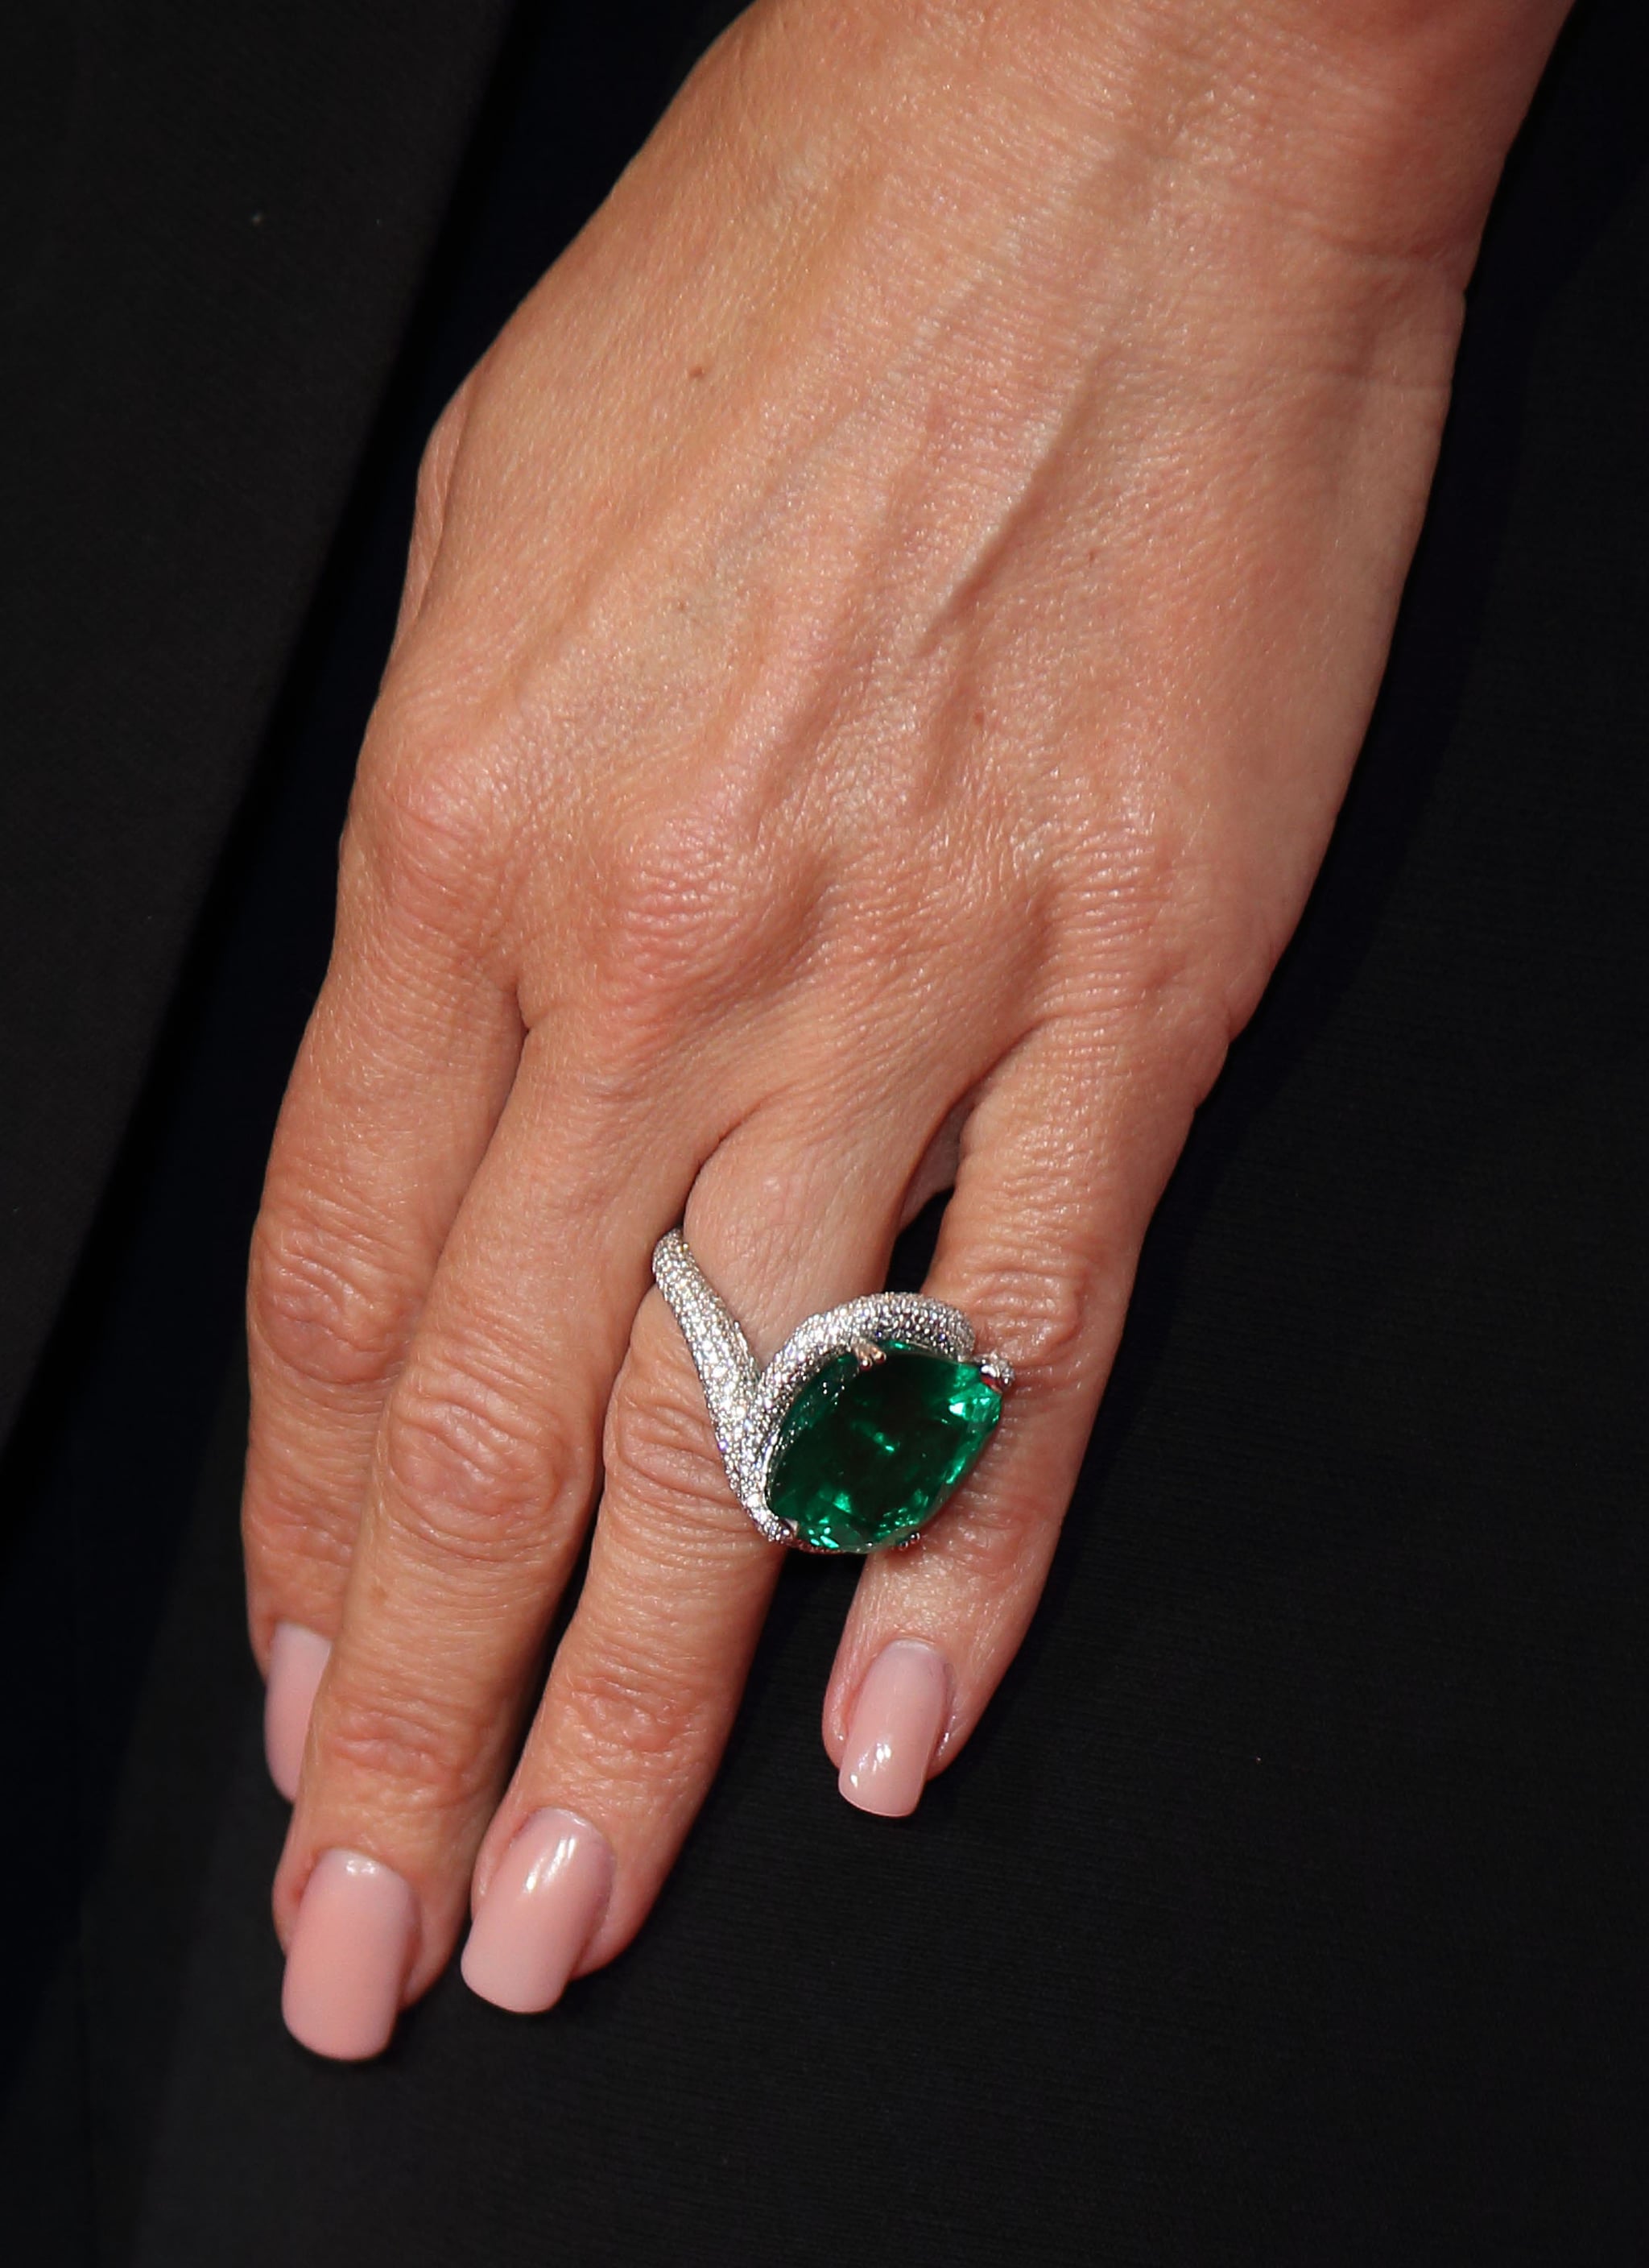 Victoria Beckham Engagement Ring 